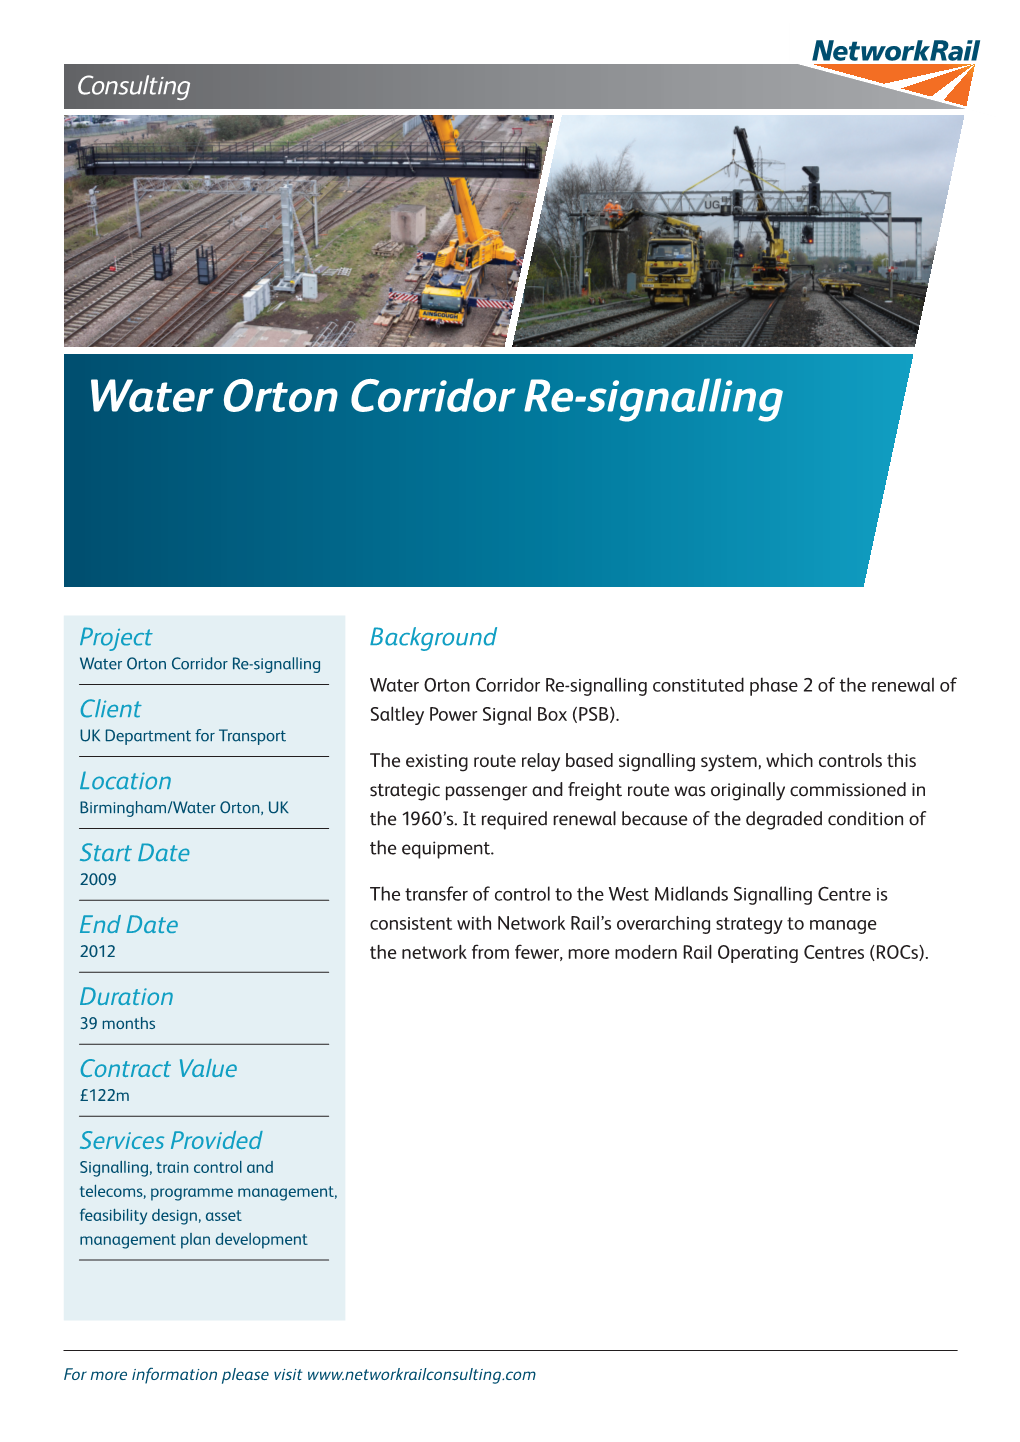 Water Orton Corridor Re-Signalling